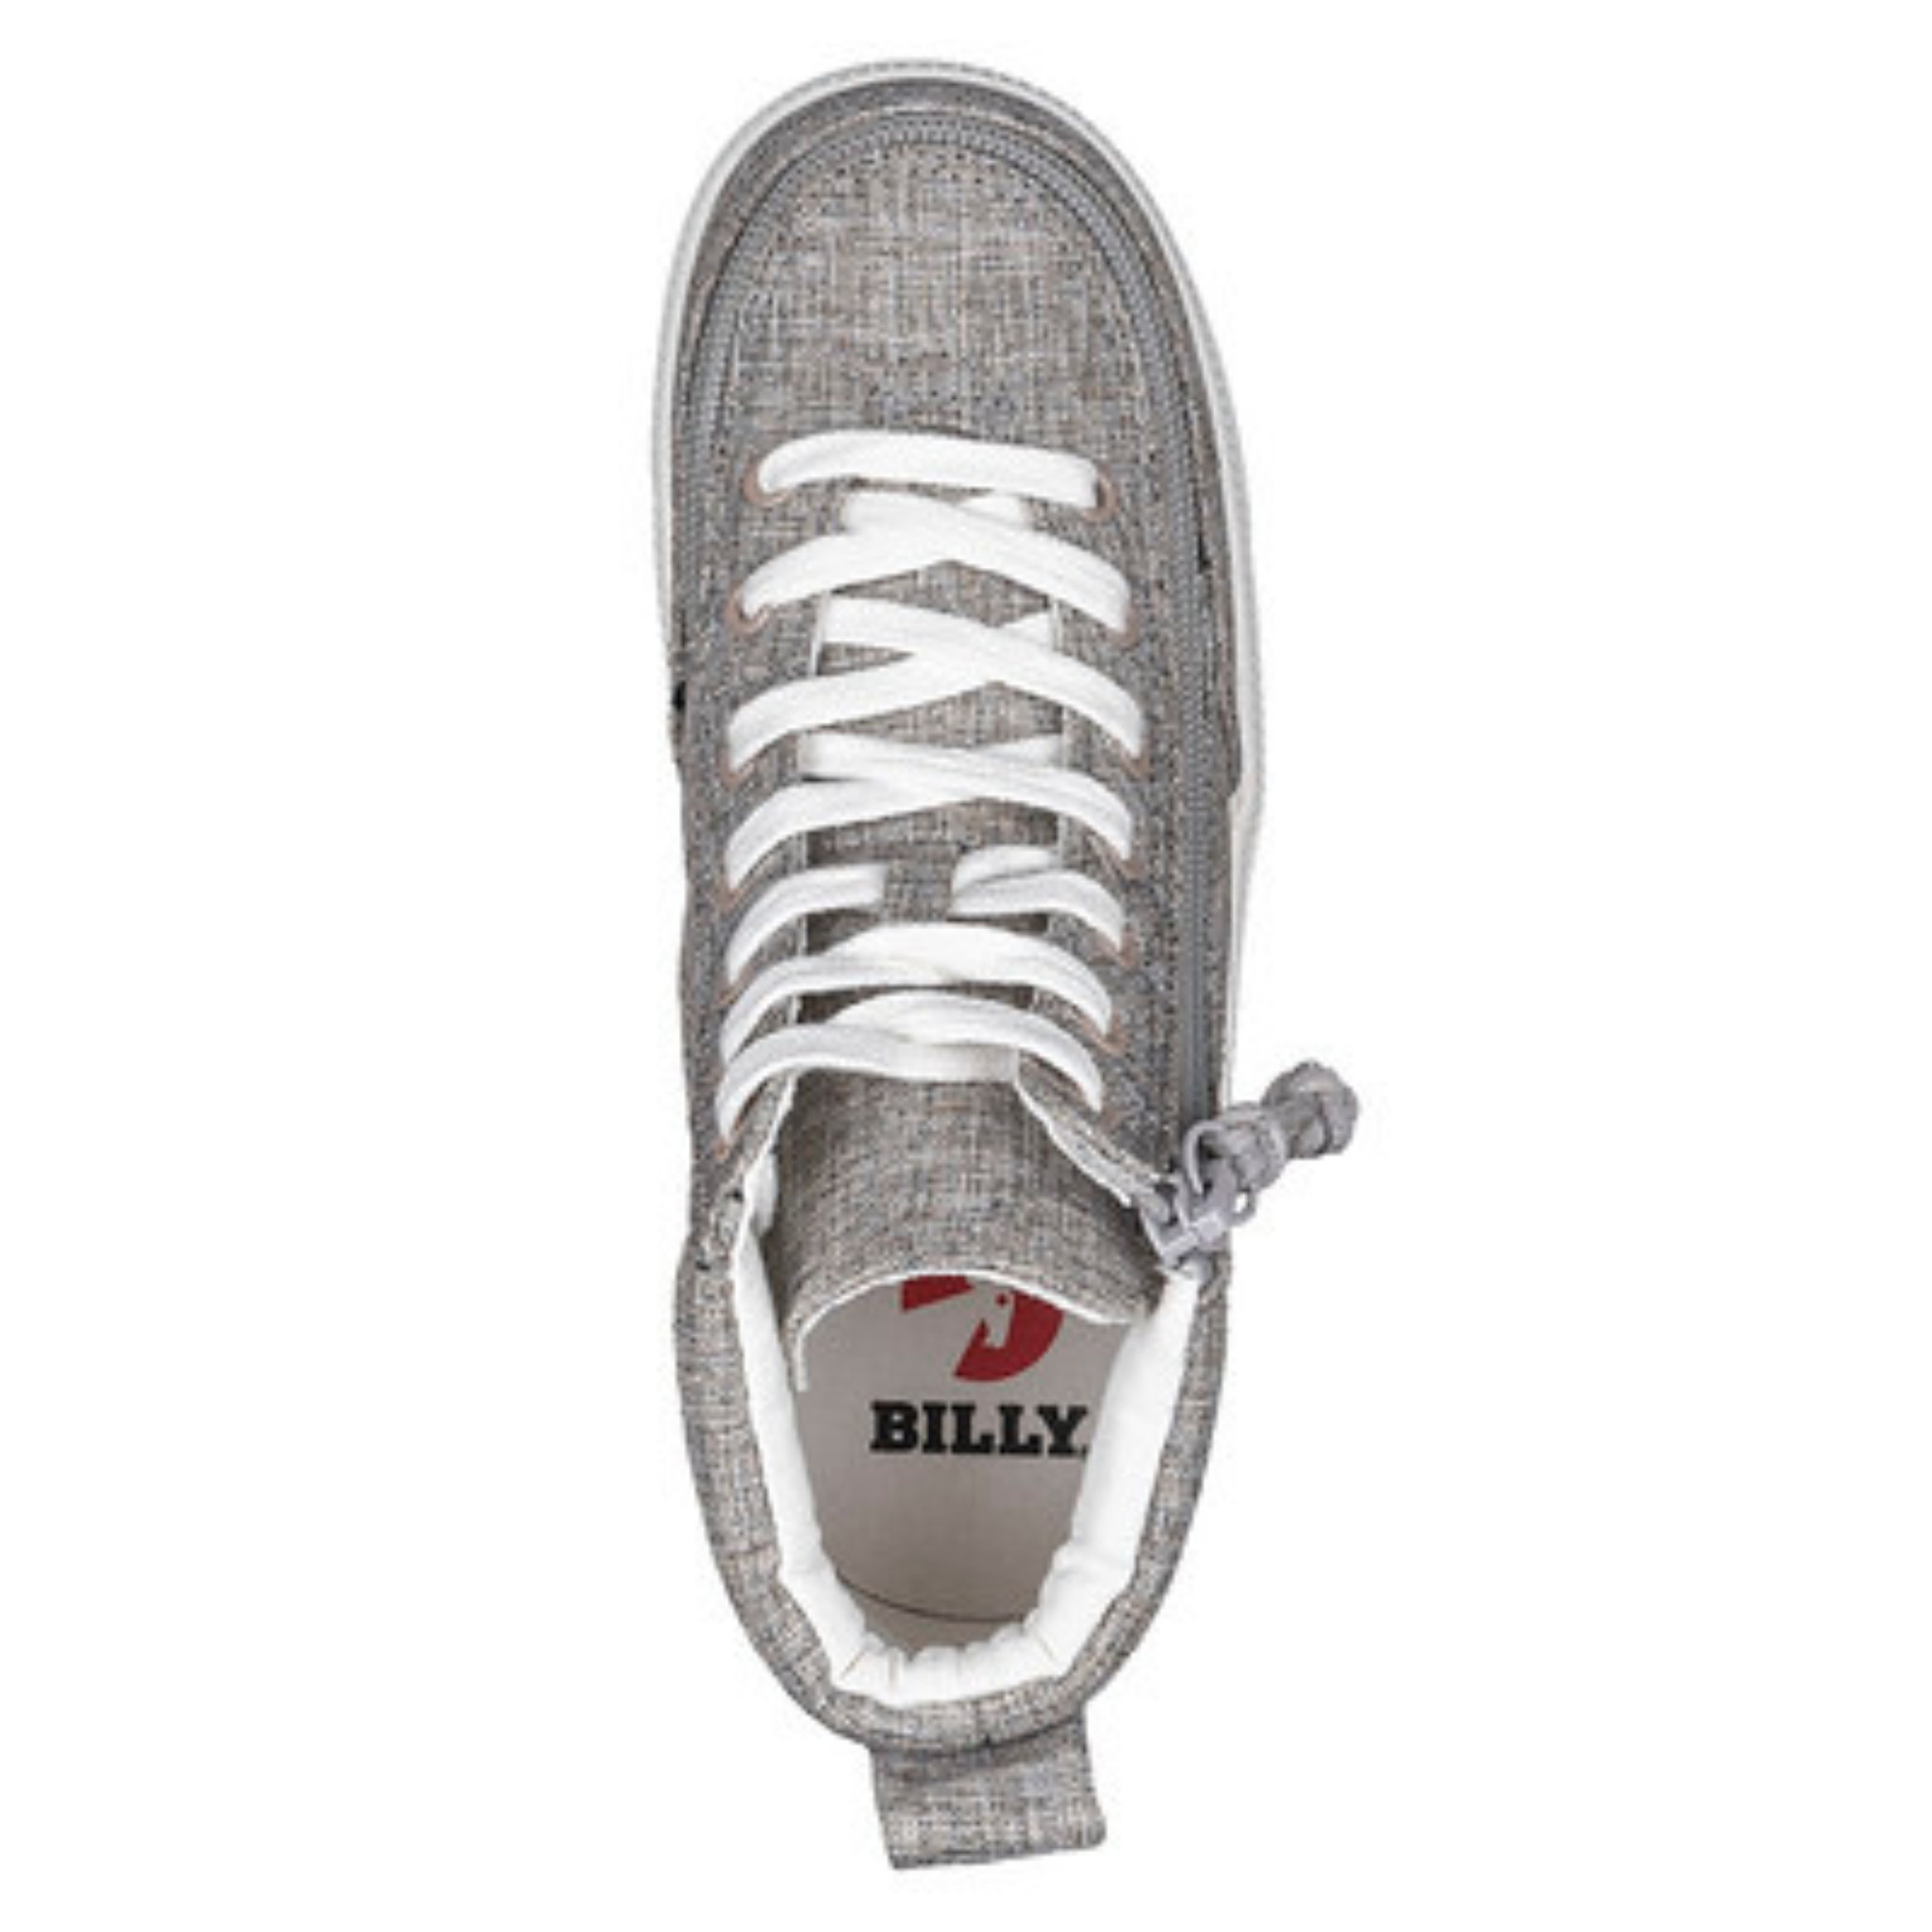 Billy Footwear (Kids) - High Top Linen Shoes Darker Grey Jersey